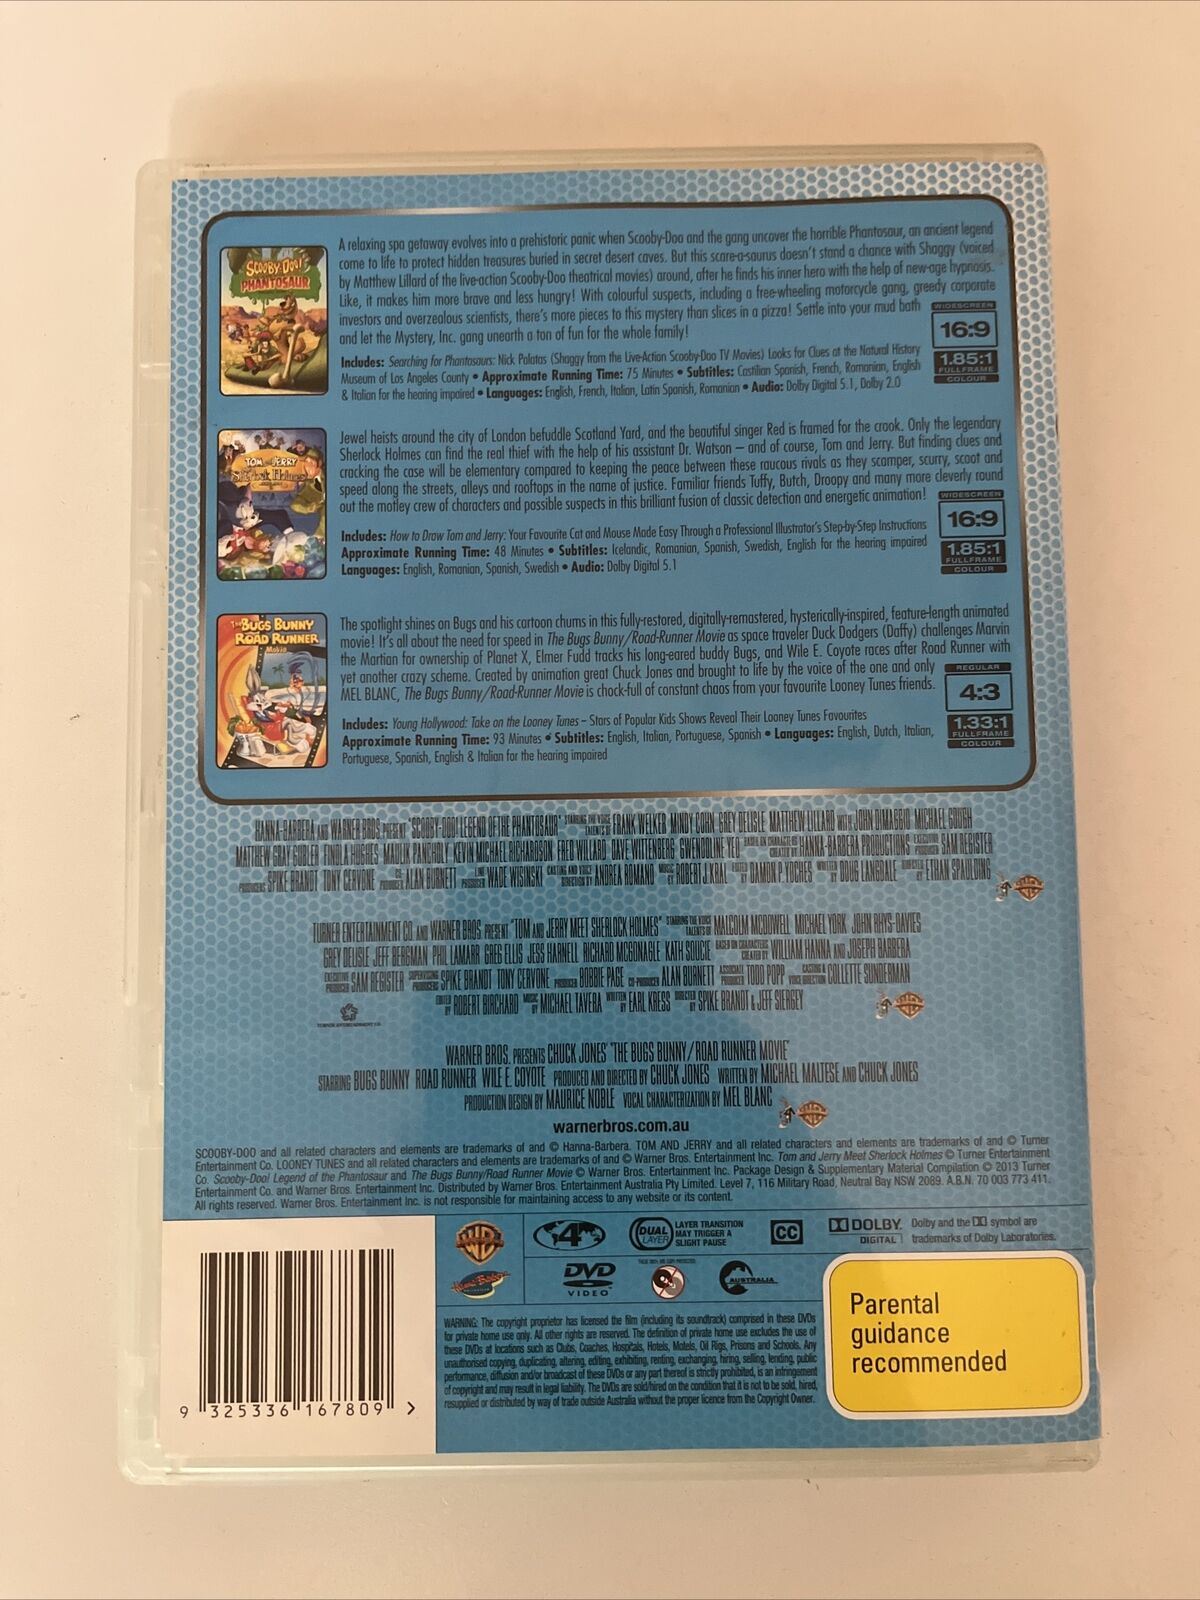 Warner Bros Kids Mix: Scooby-doo, Tom & Jerry, Bugs Bunny (DVD, 2013, 3-Disc)